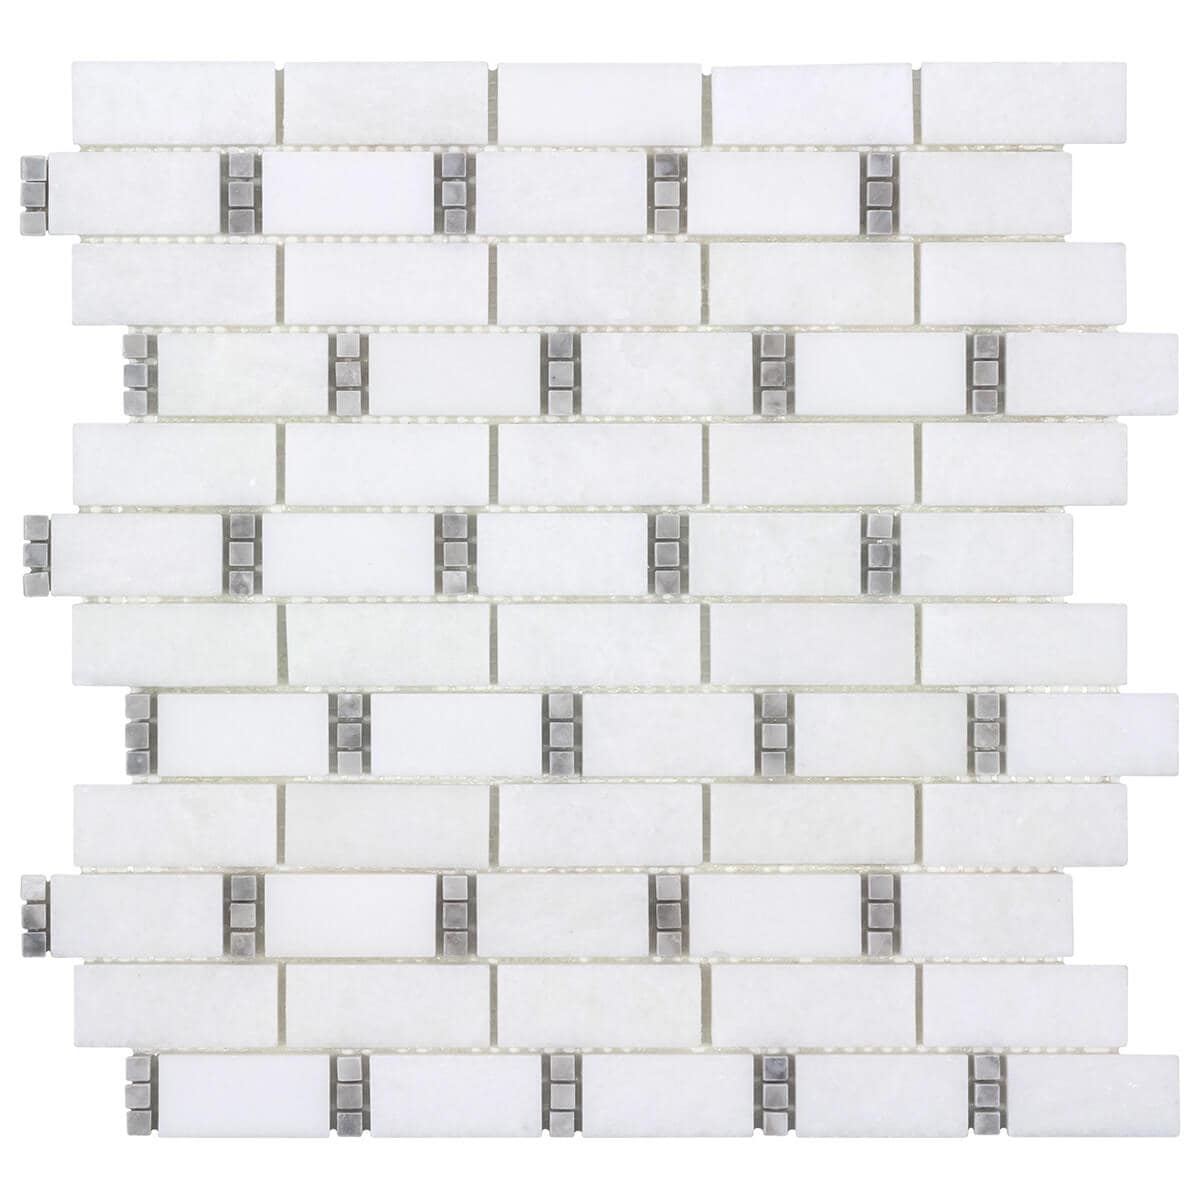 Domino stone pattern mosaic tile